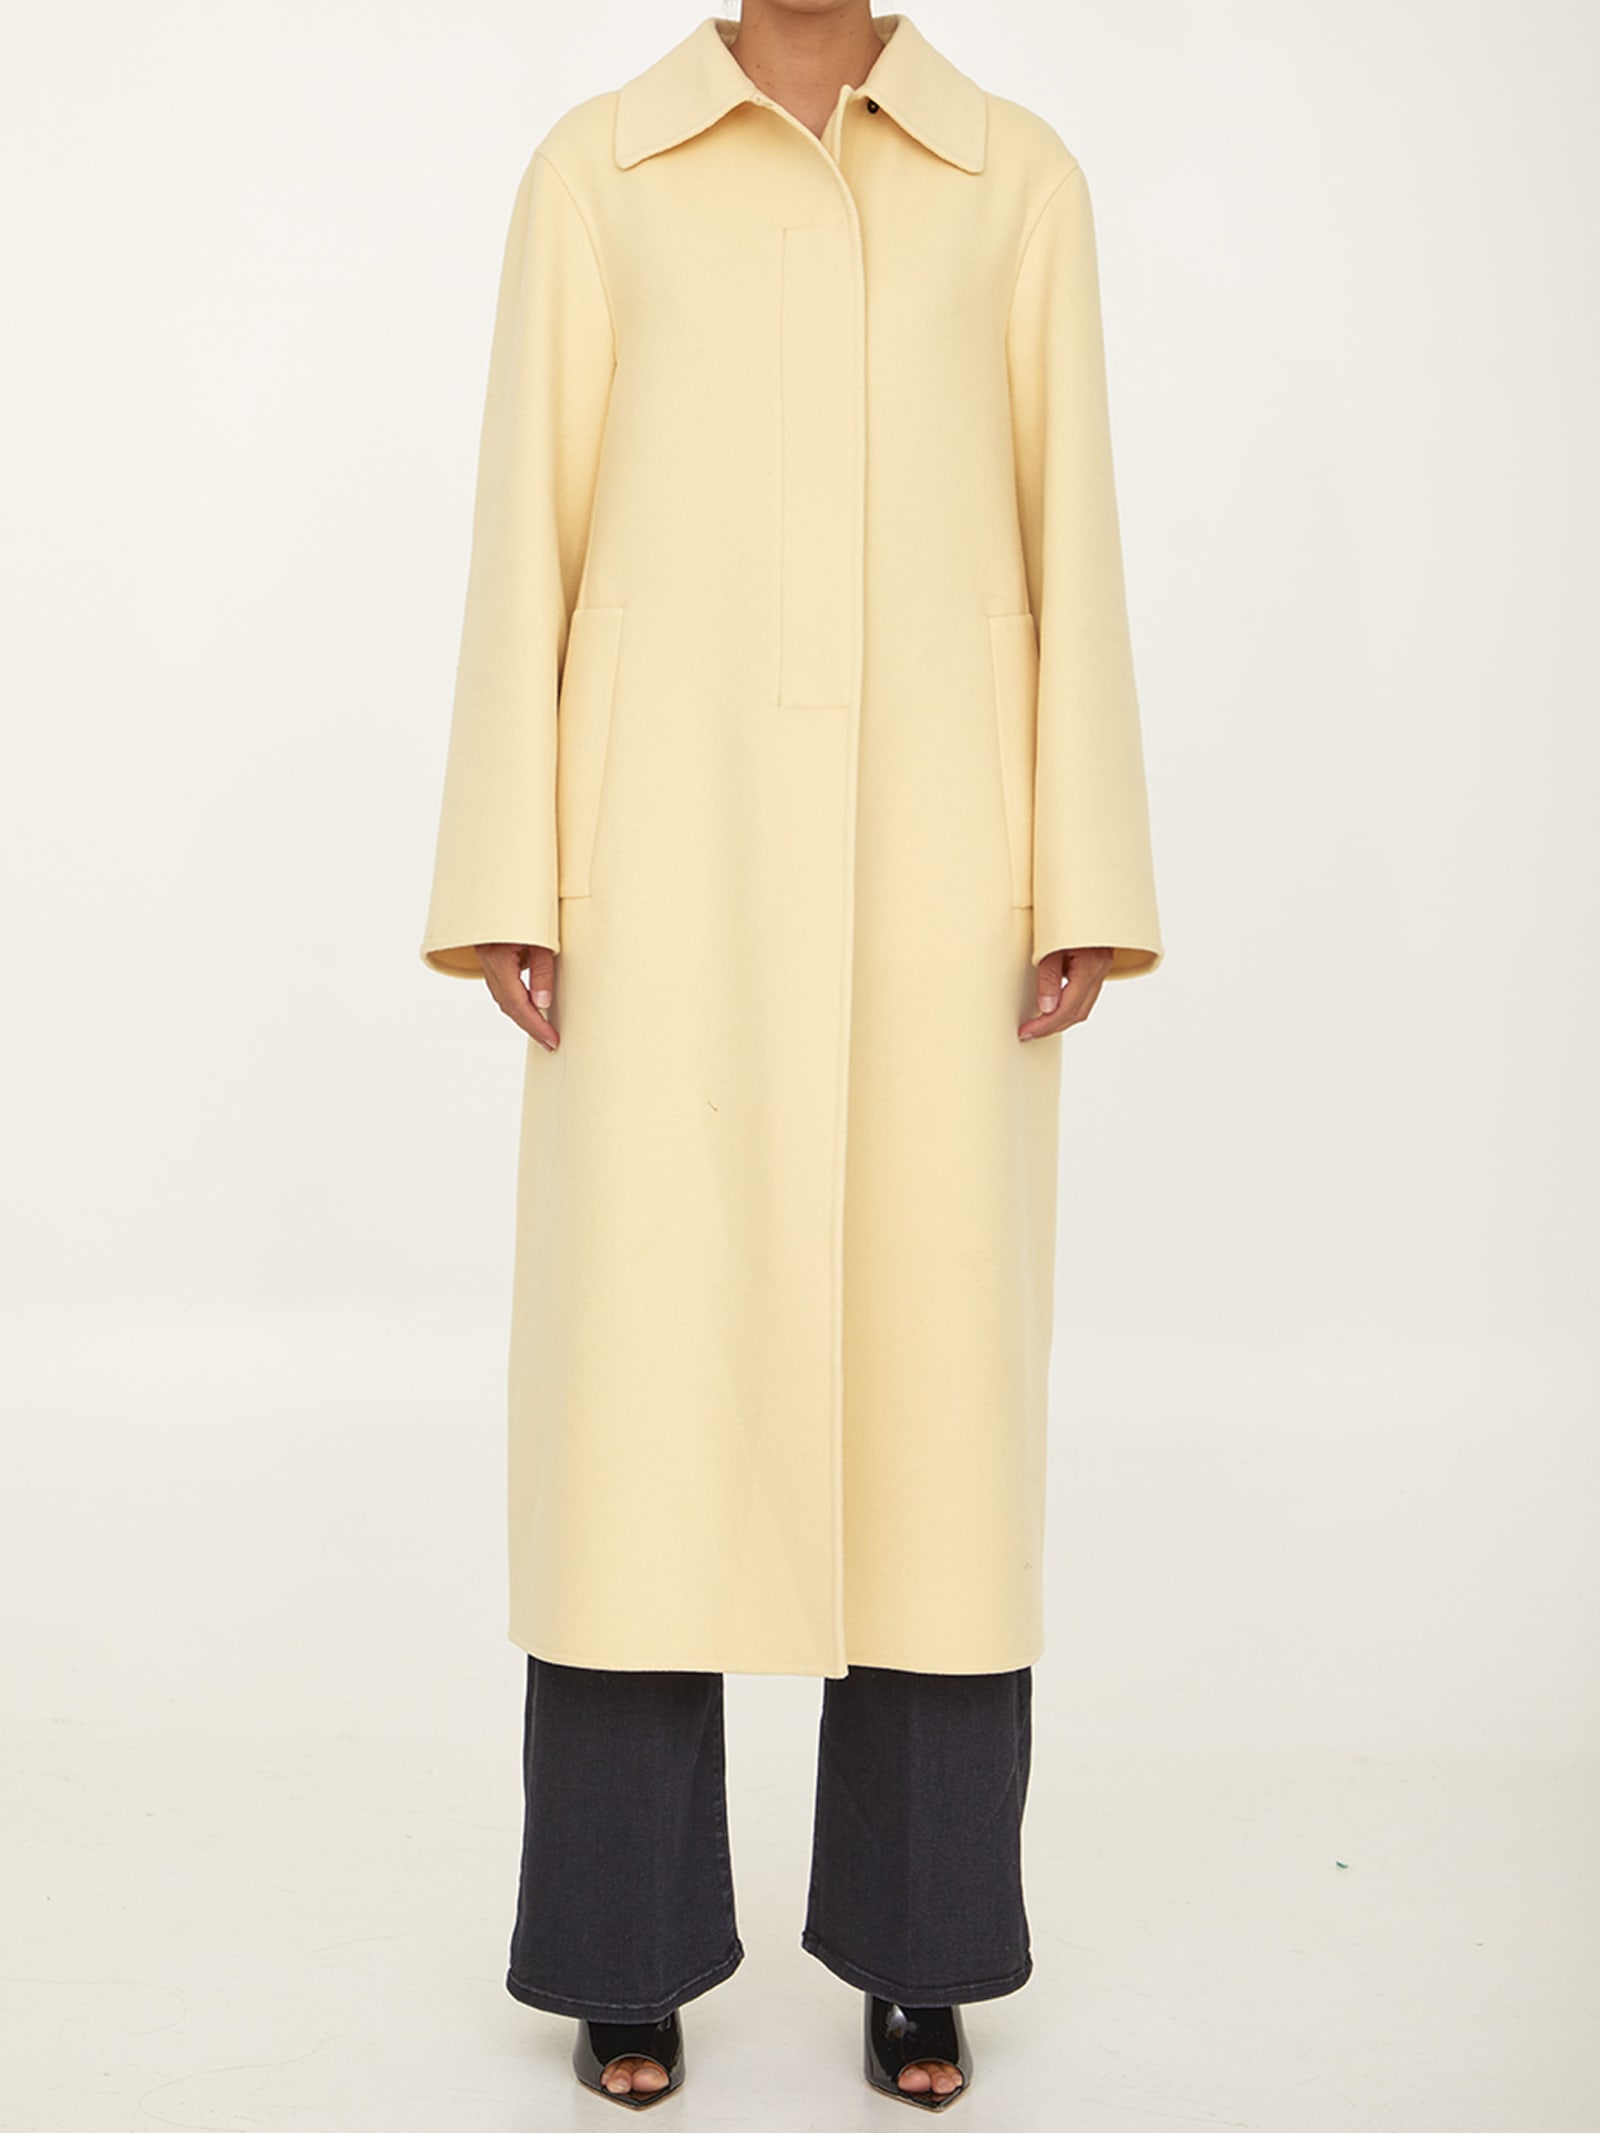 Jil Sander Yellow Wool Coat